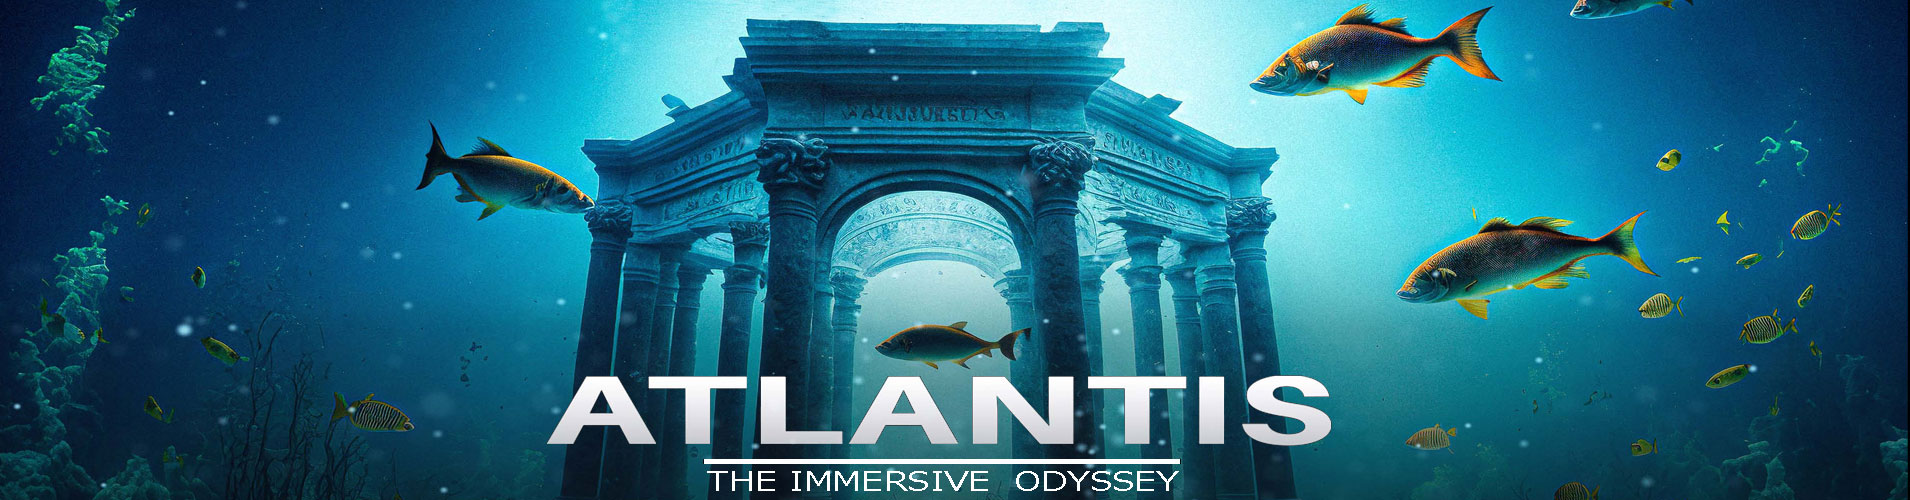 1090x500-Atlantis.jpg